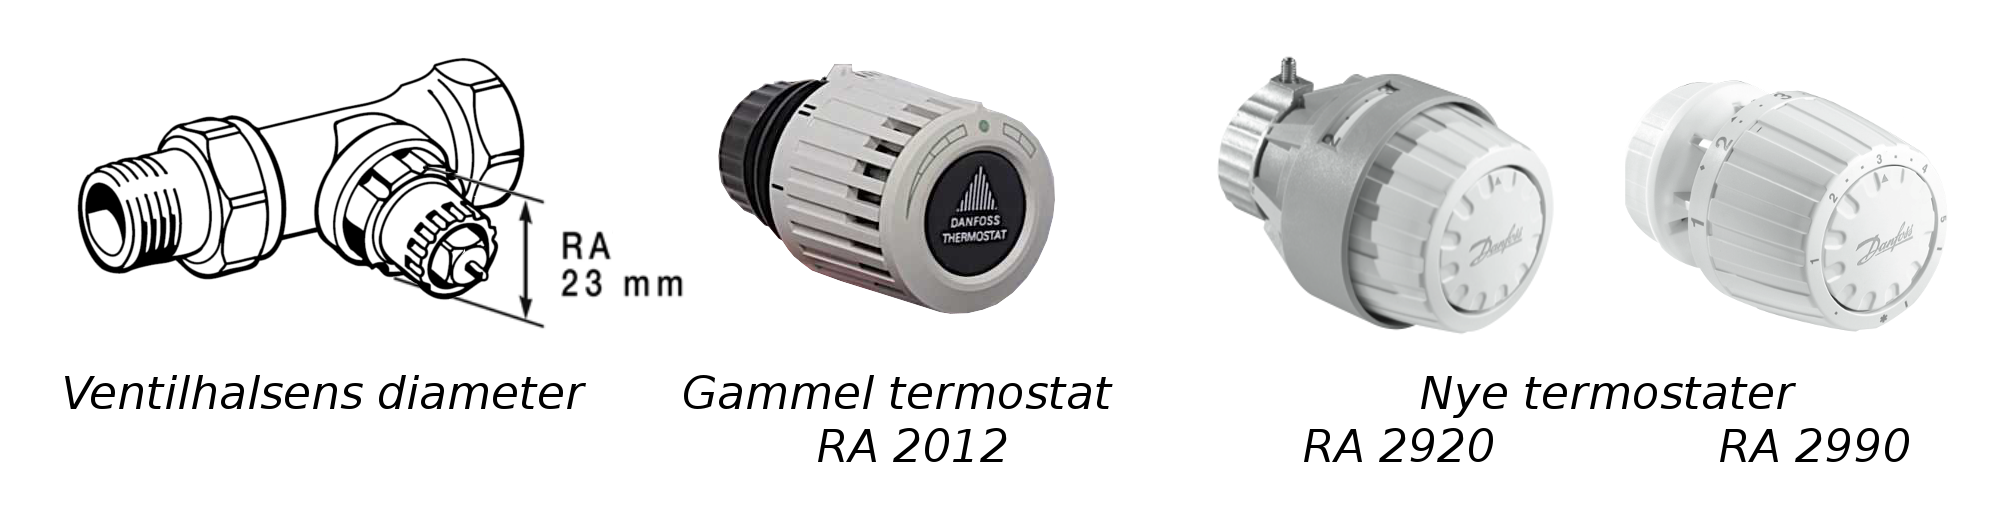 reservoir obligat flyde Danfoss – RA 2990 termostat med indbygget føler, hvid (403222100) ‒  WATTOO.DK